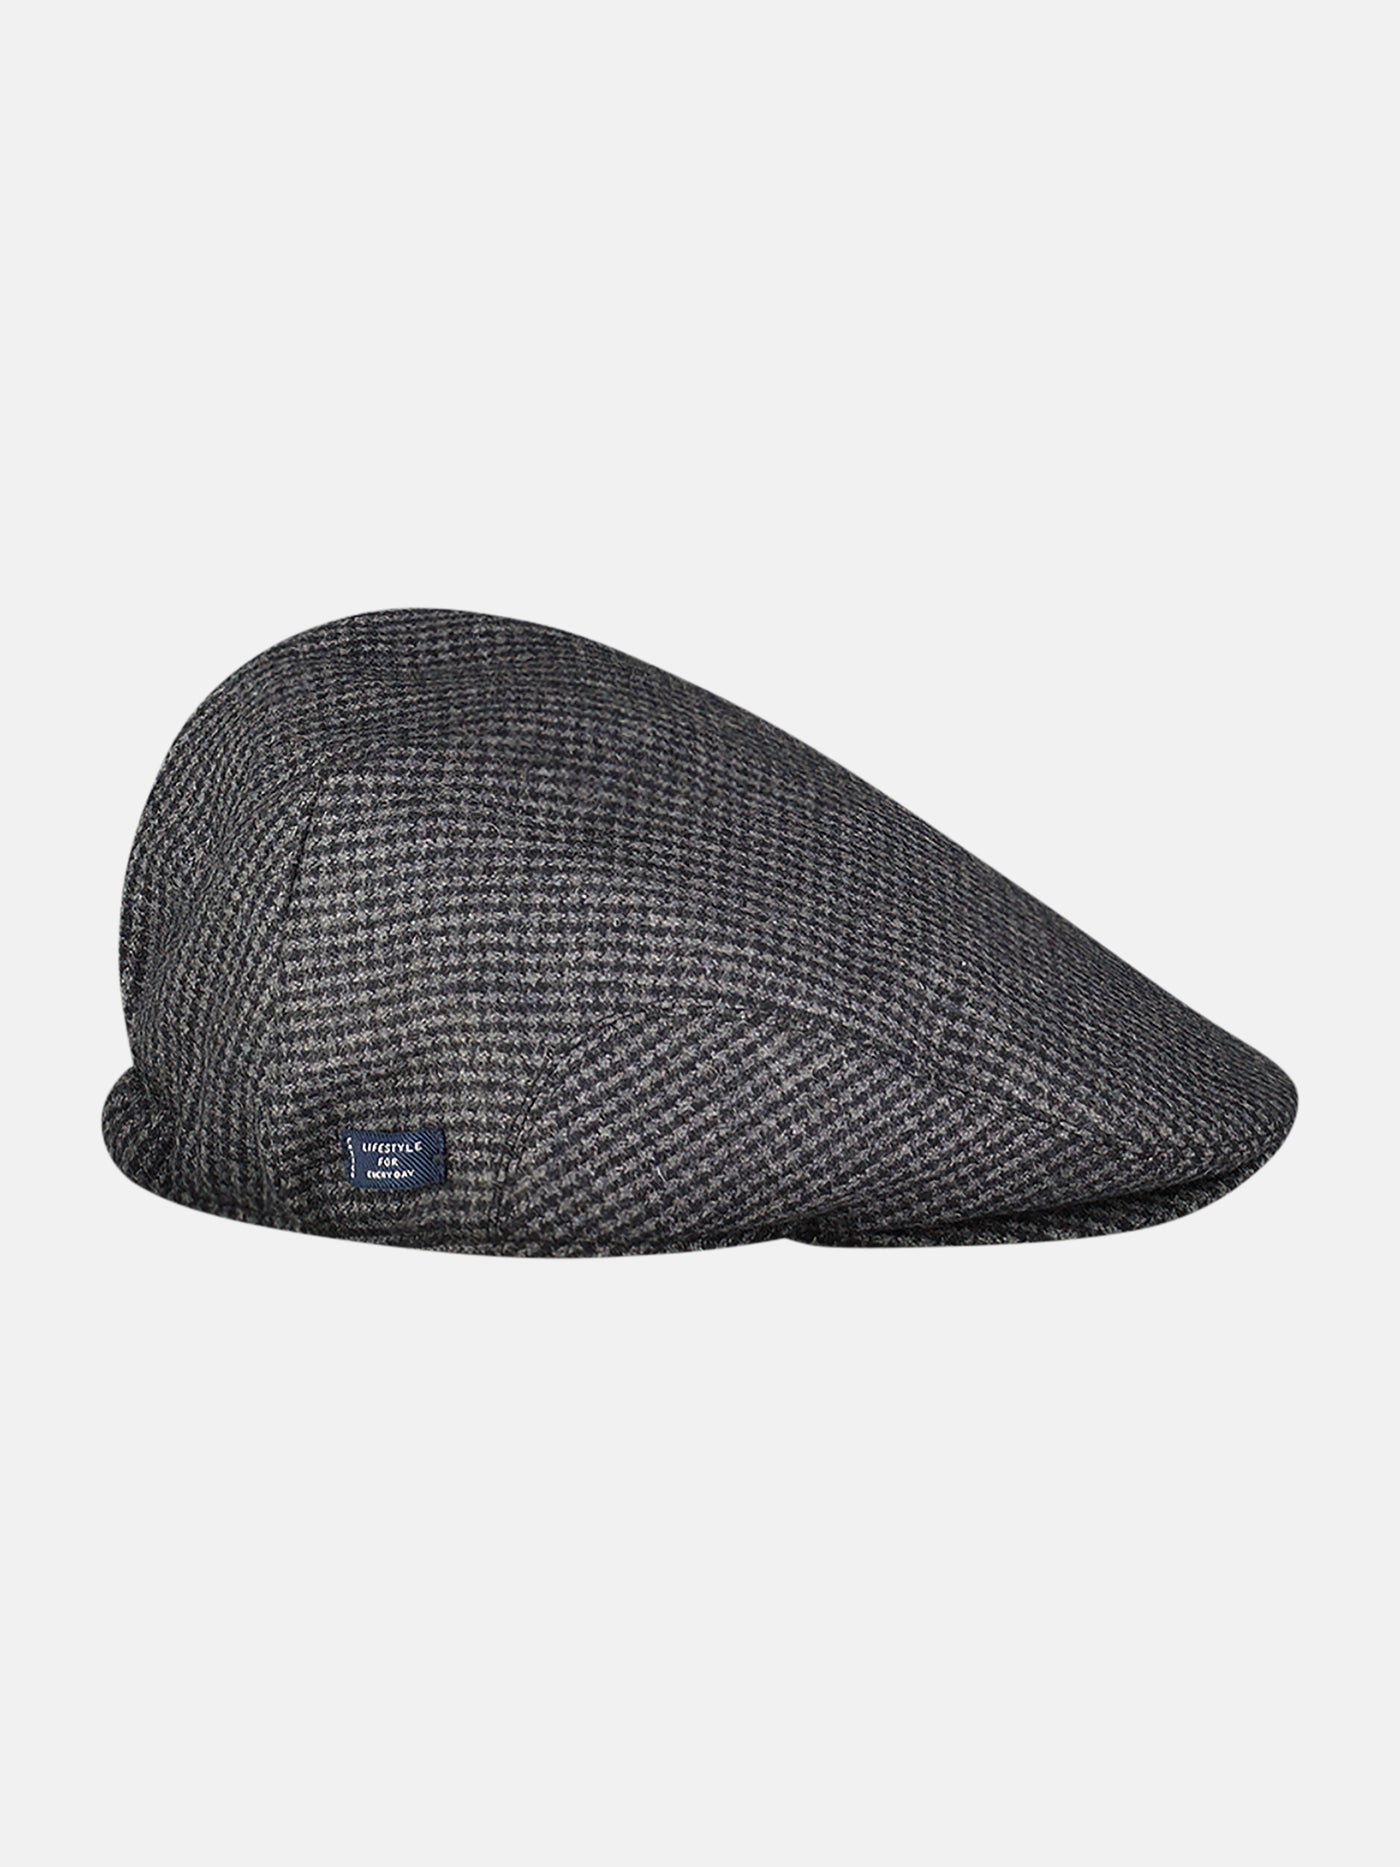 GATSBY flat cap. Houndstooth pattern